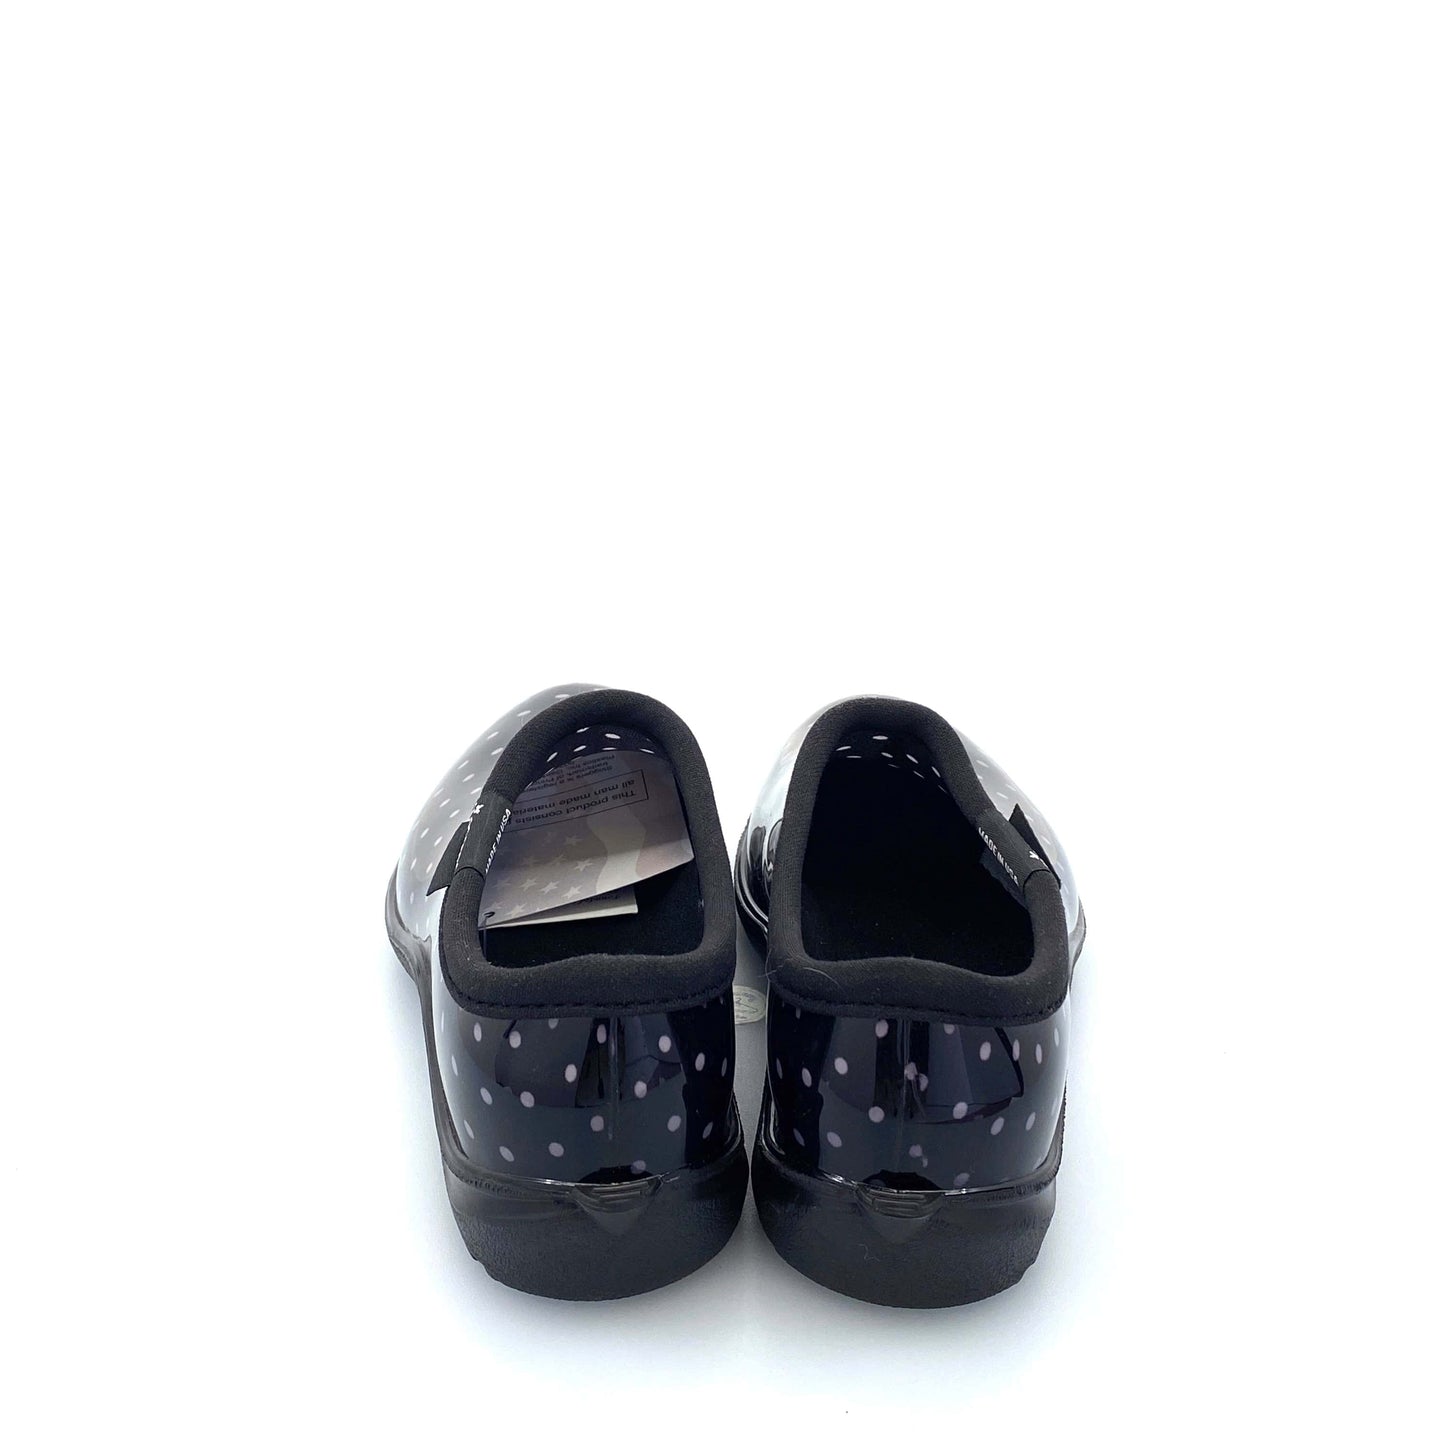 Sloggers Womens Size 6 Garden Shoes Black Polka Dot NEW